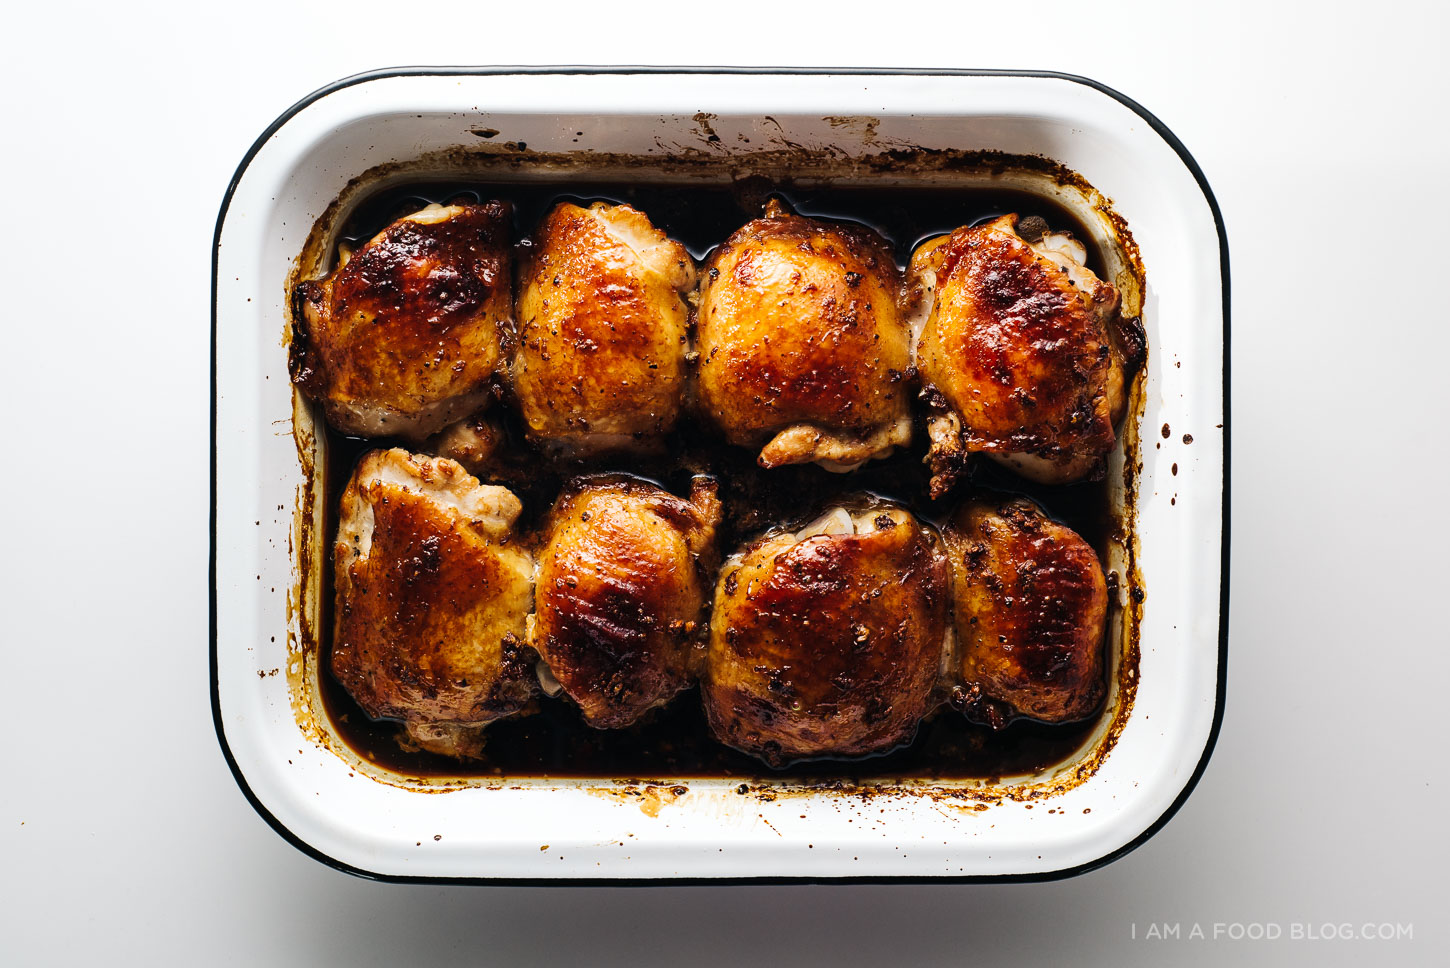 Receta fácil de pollo con sésamo al horno - www.iamafoodblog.com